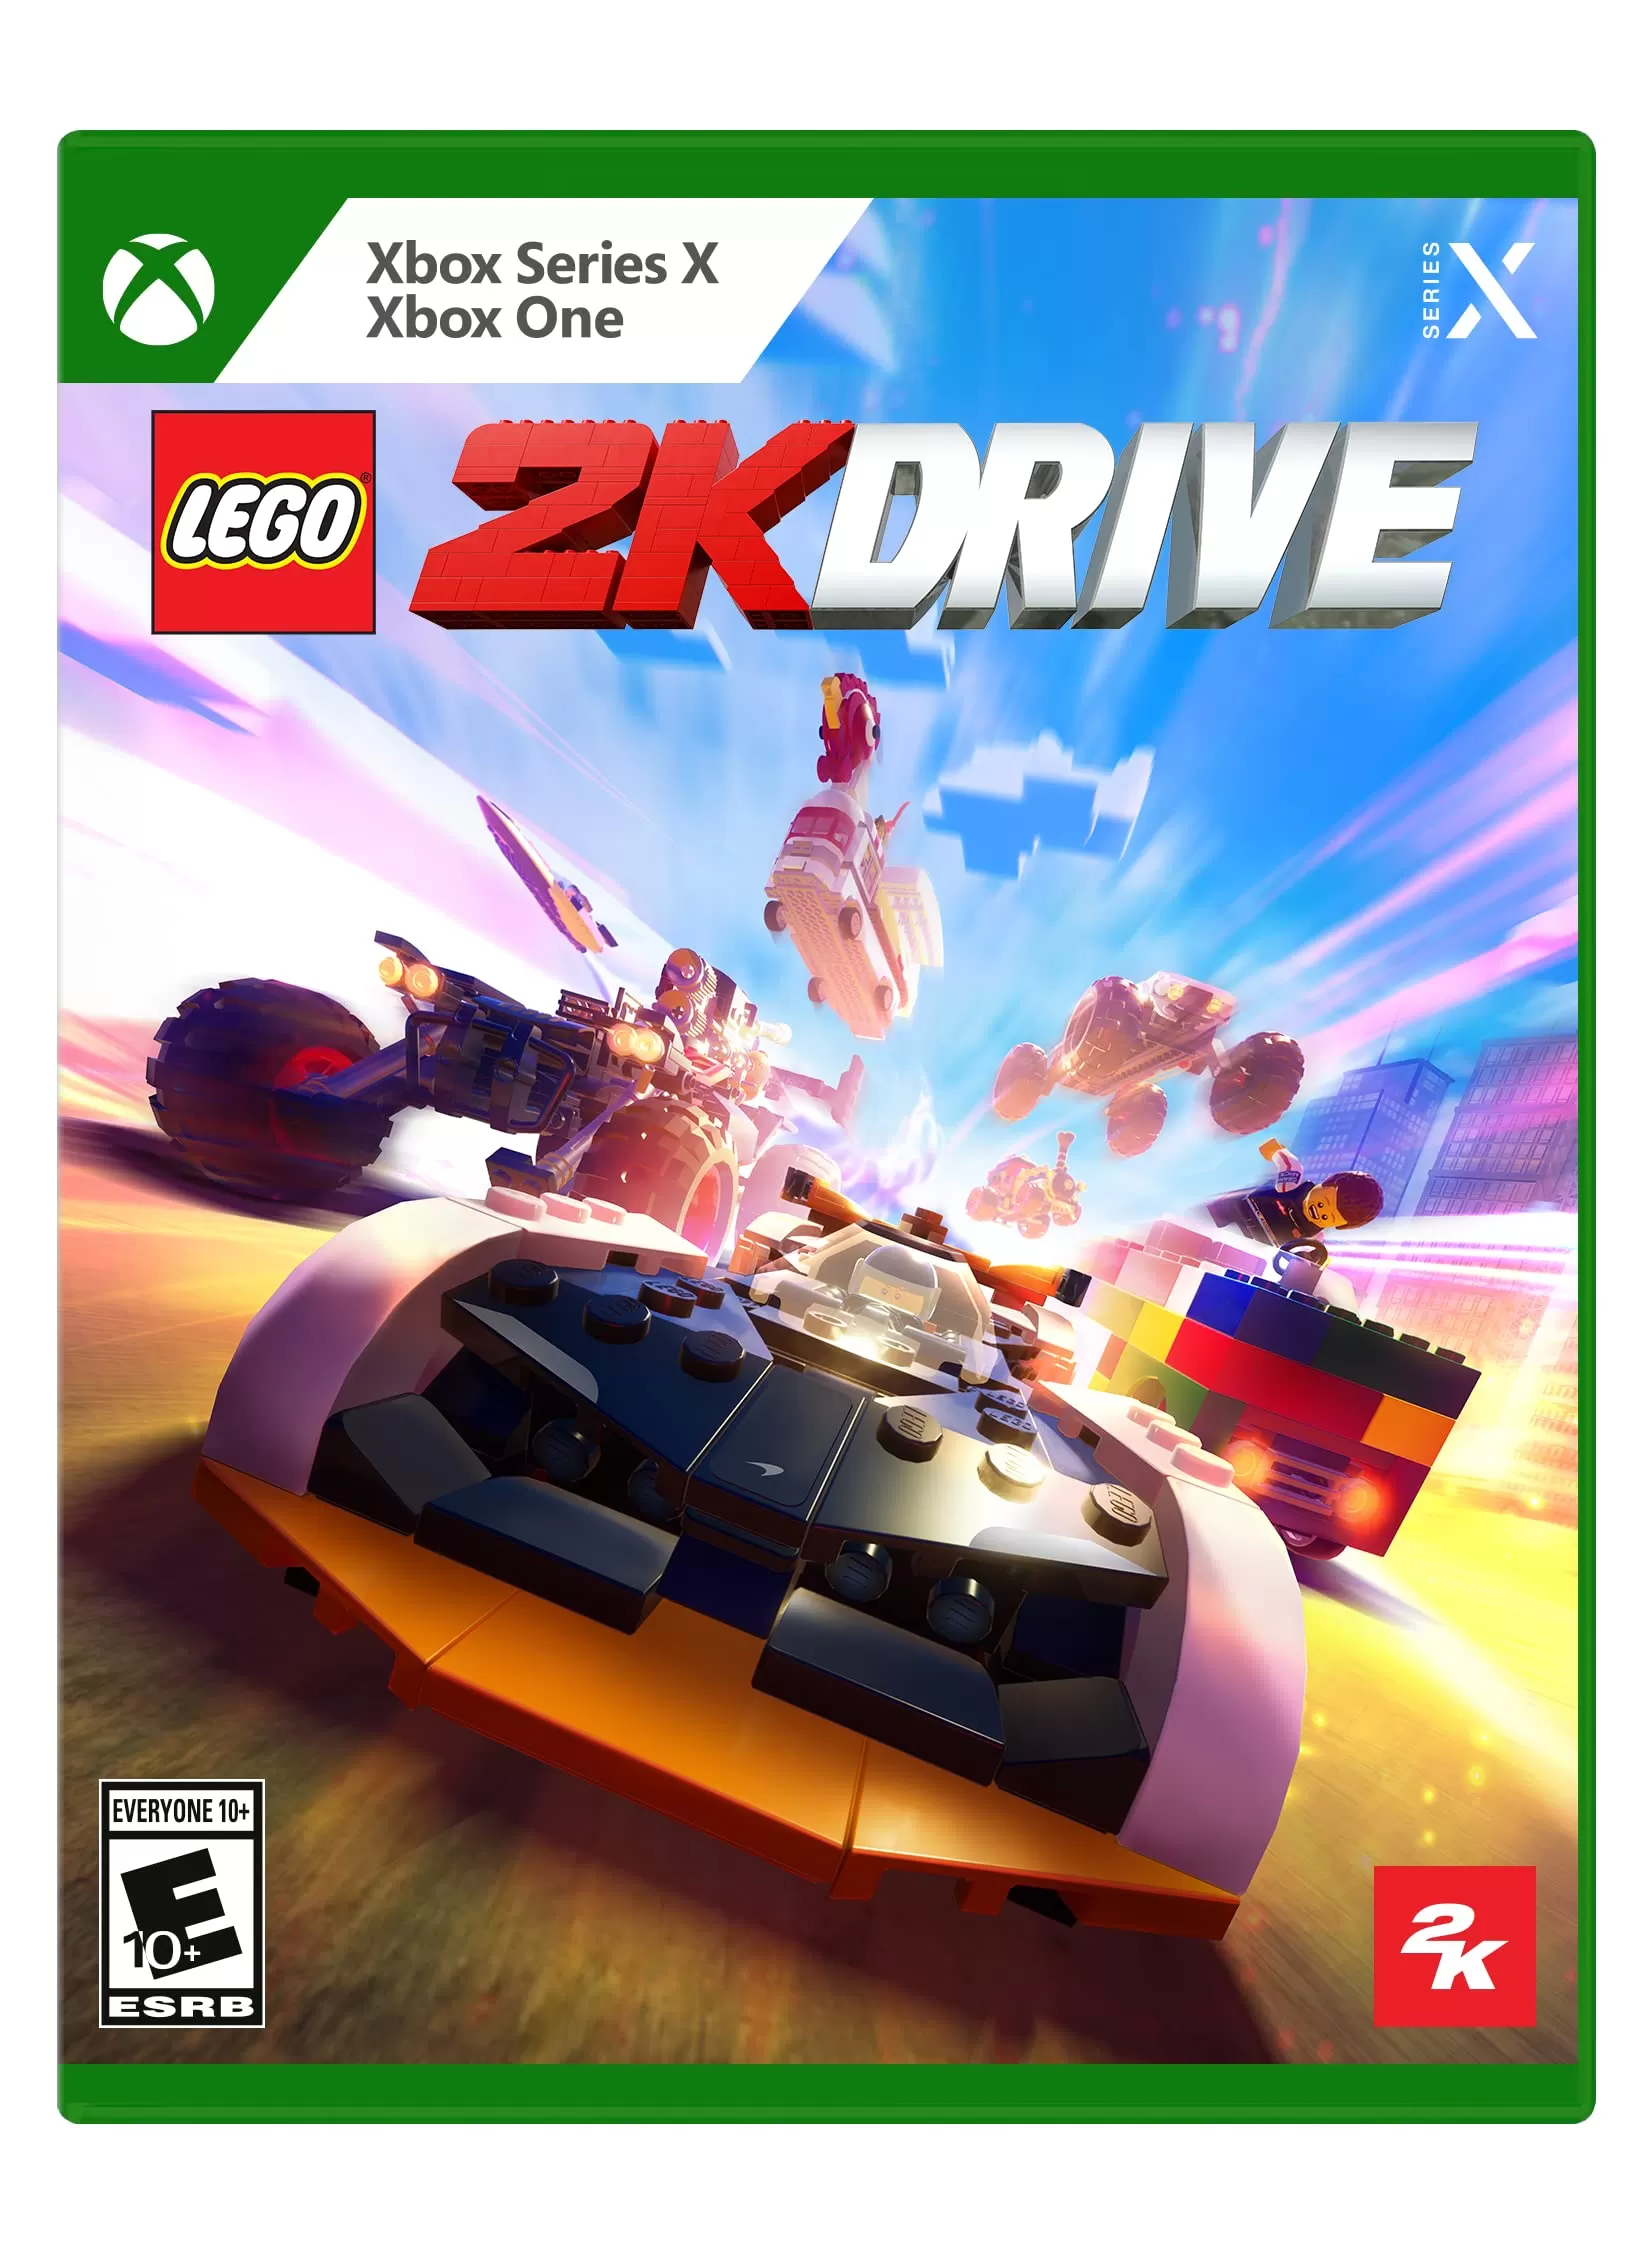 Lego 2k drive - xbox series x